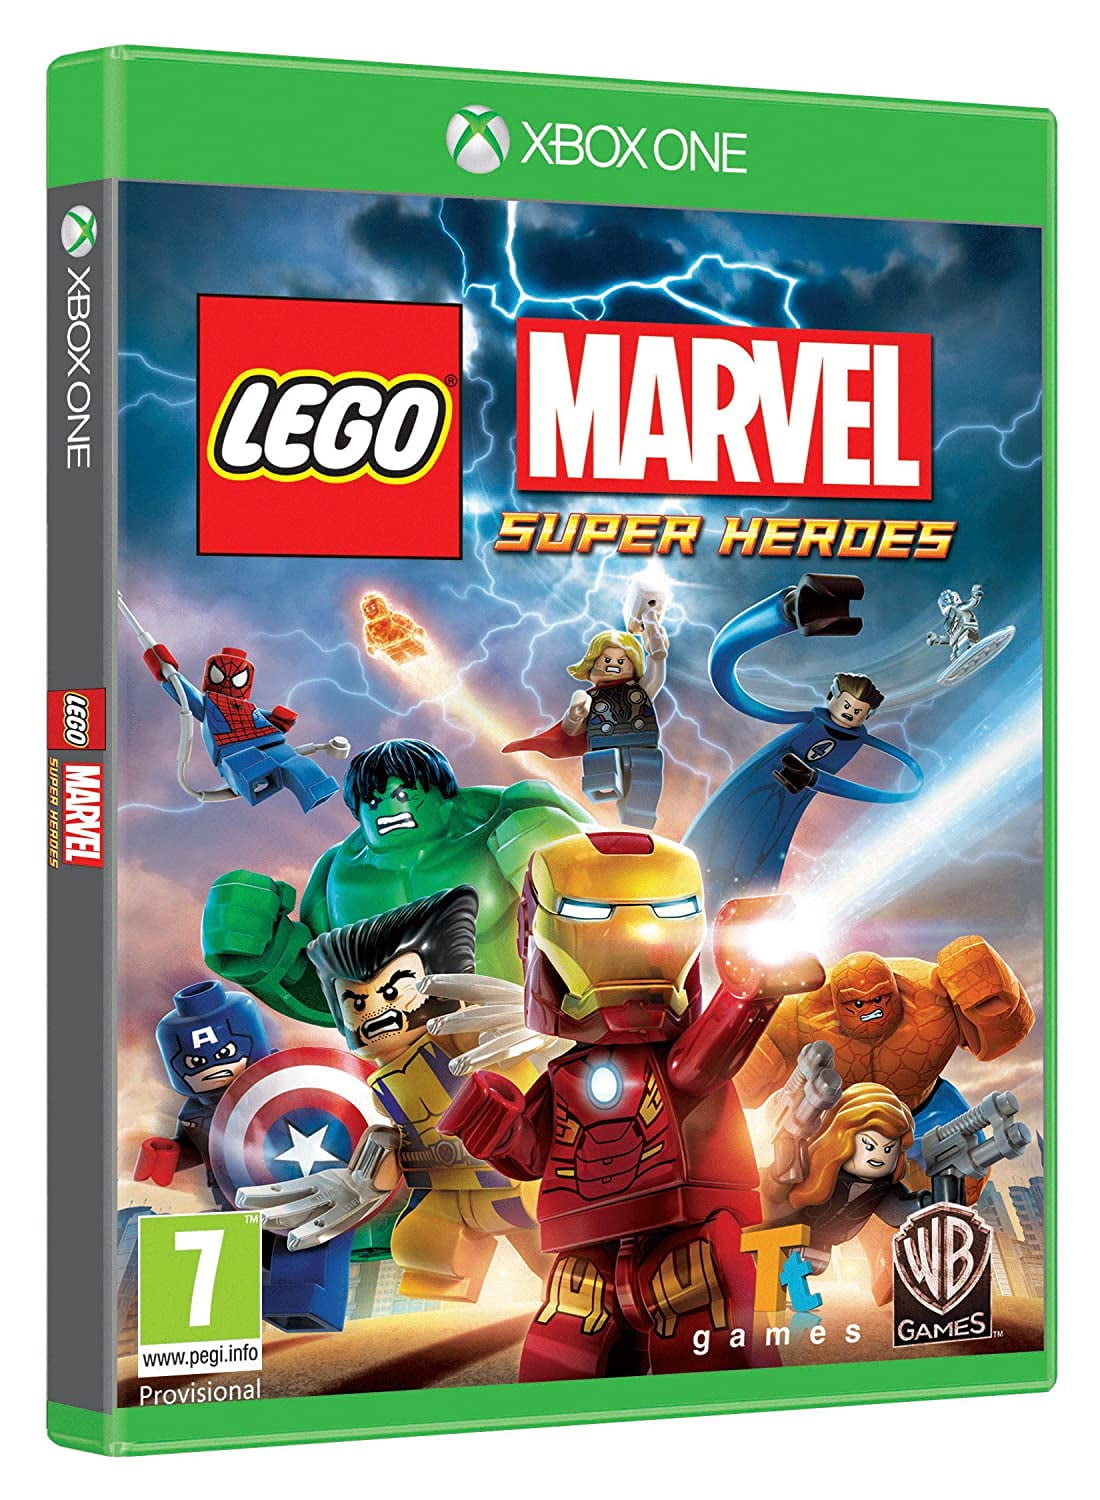 LEGO Marvel Super Heroes (Video Game) - TV Tropes